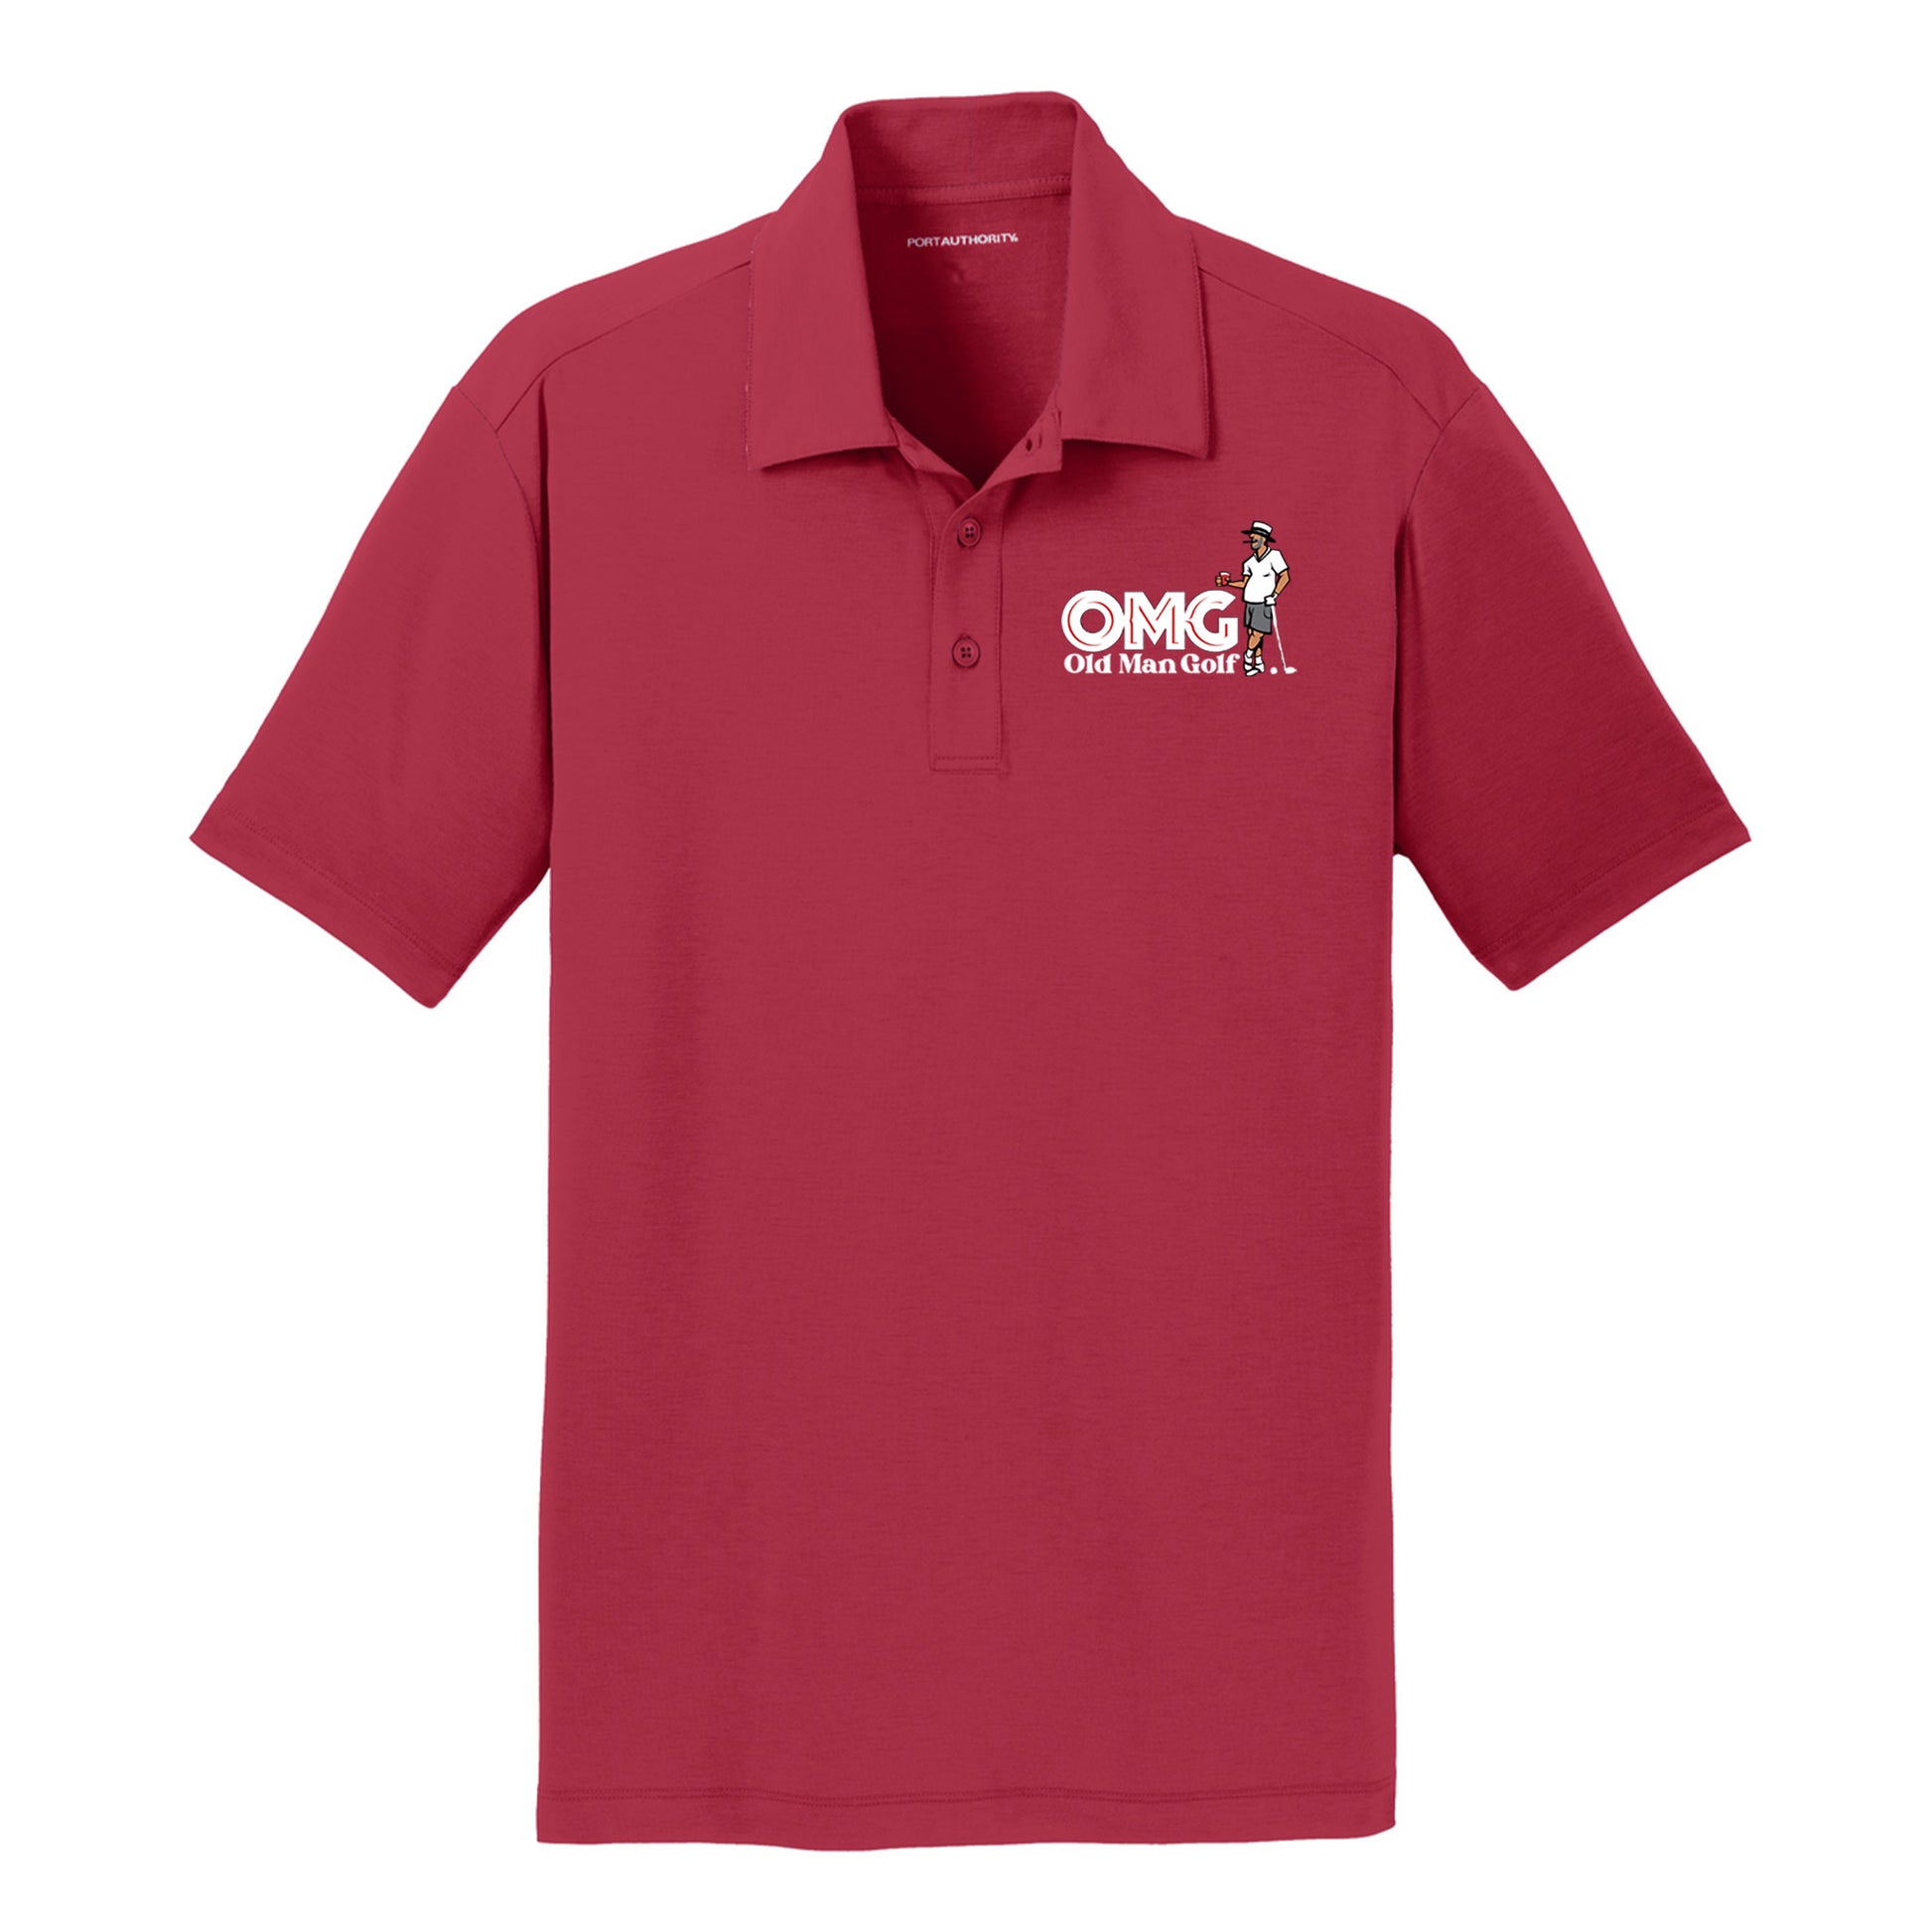 Vapor graphic print red golf shirt Men's Golf Polo (red shirt